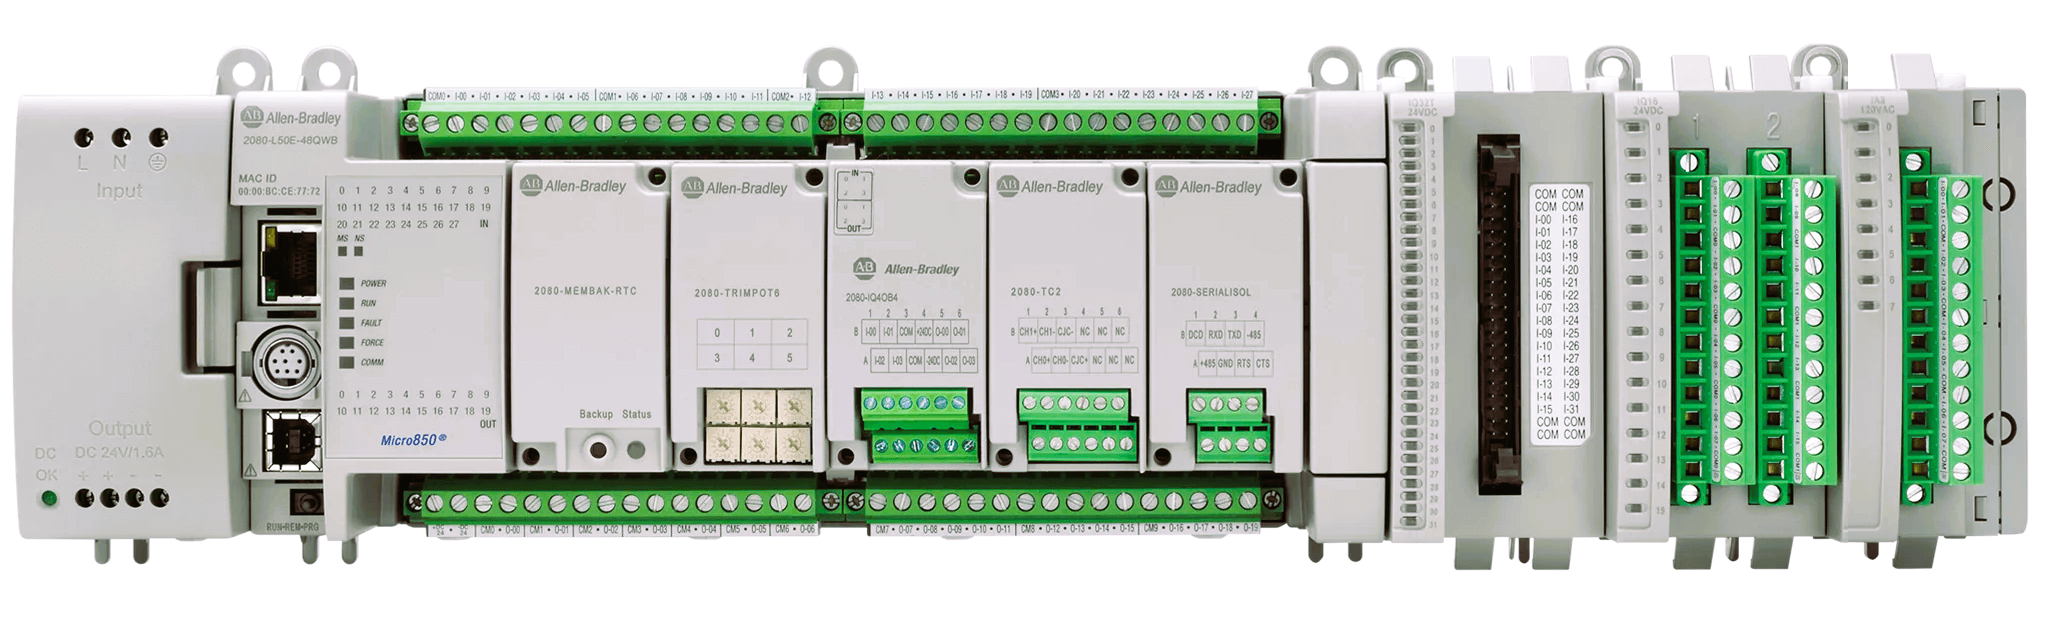 Micro850 Programmable Logic Controller